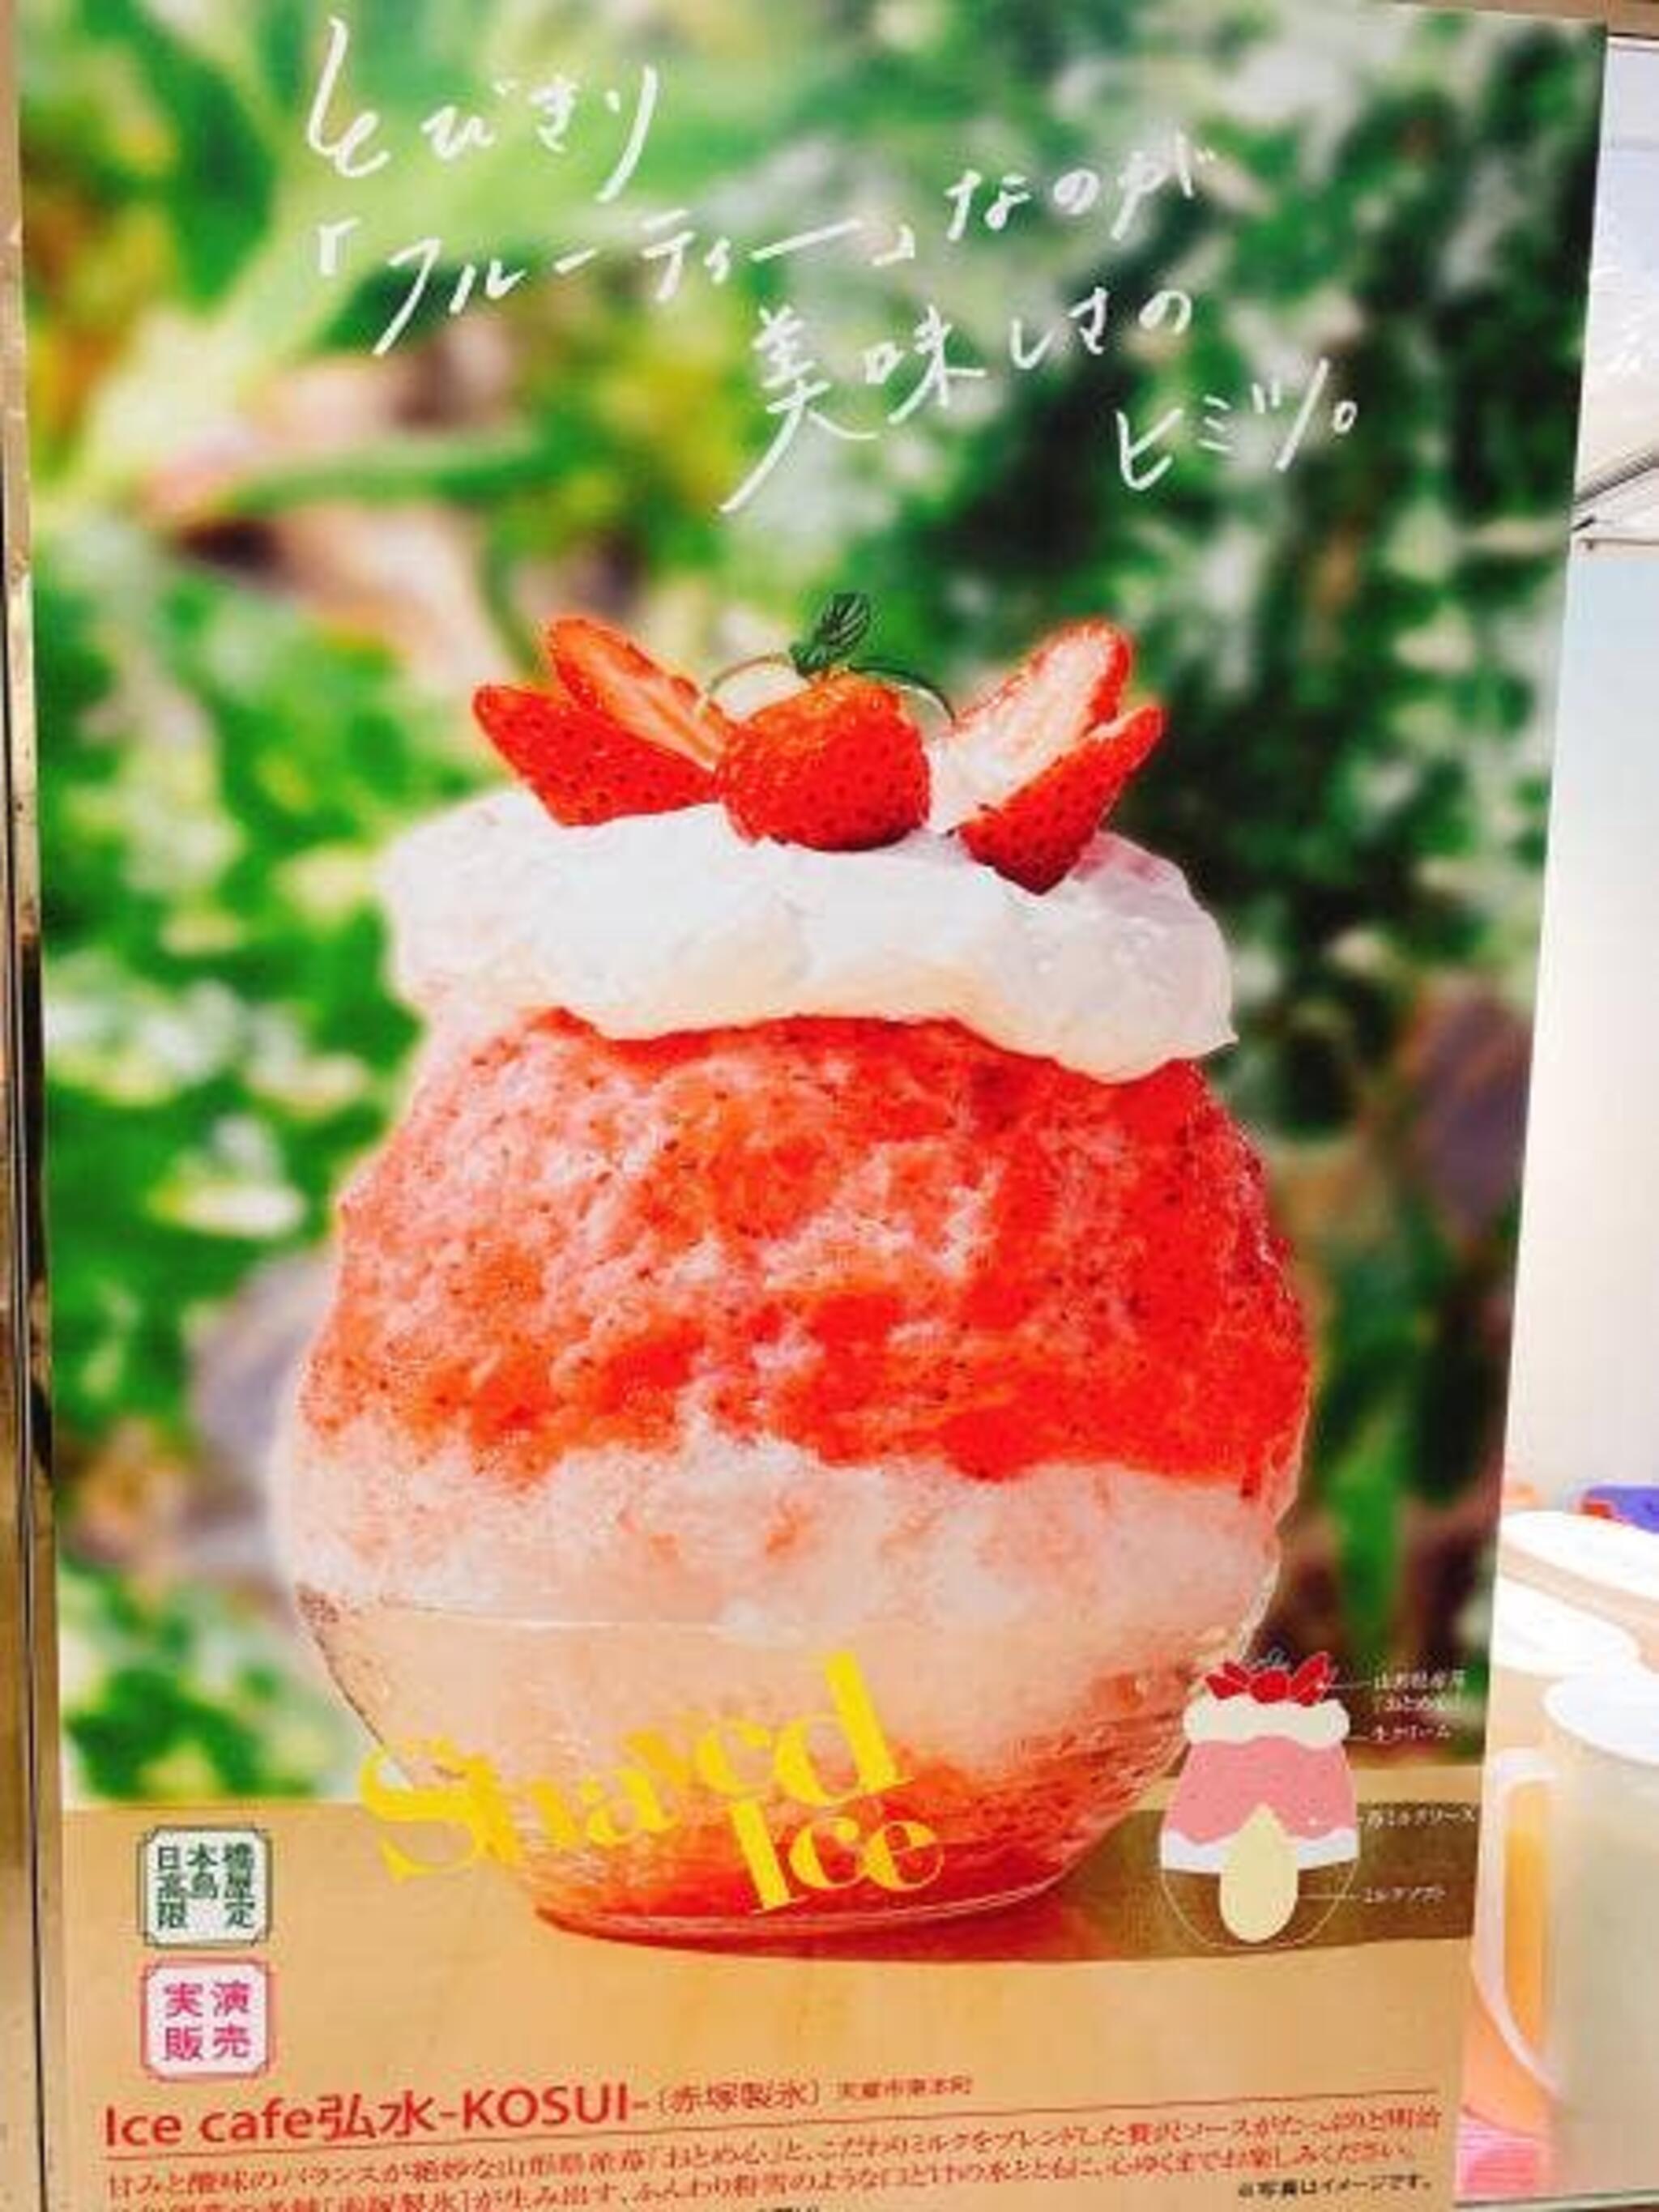 Ice cafe’ 弘水 -KOSUI-の代表写真9